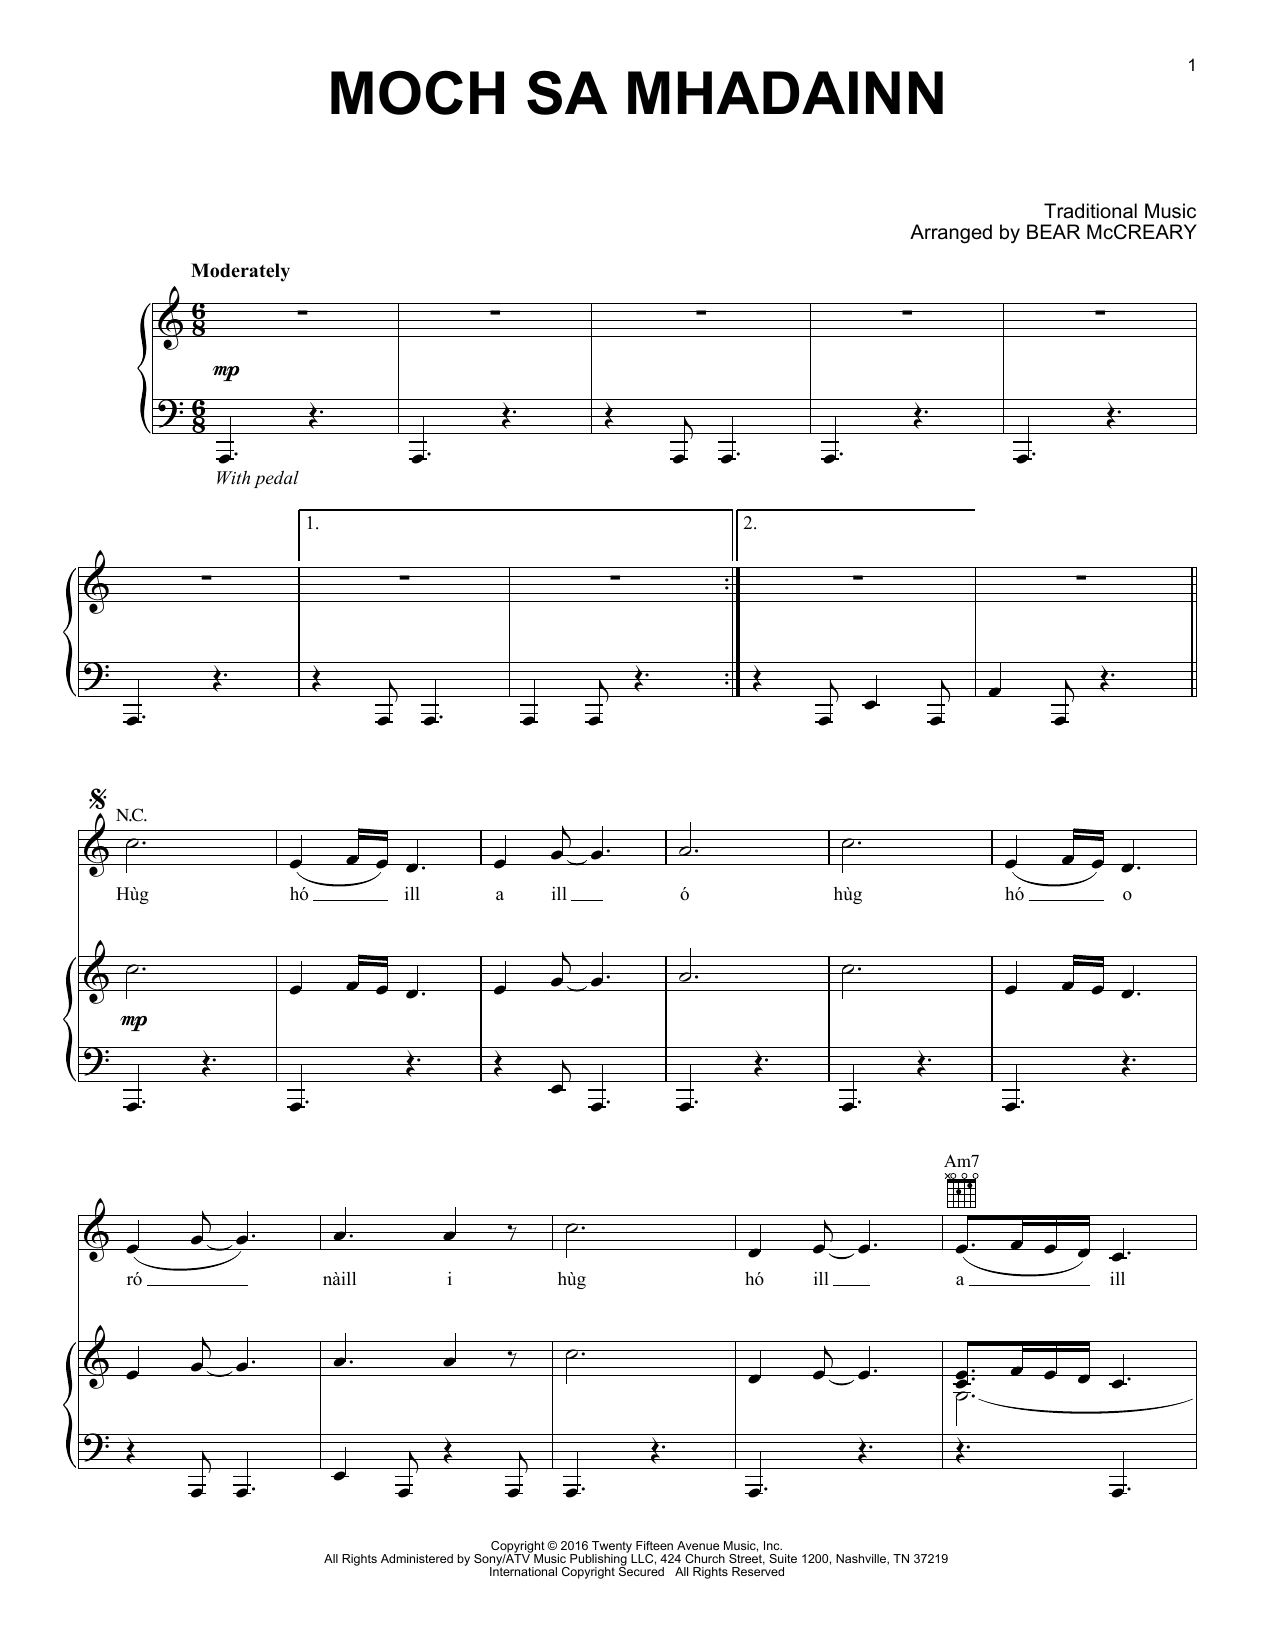 Bear McCreary Moch Sa Mhadainn (from Outlander) Sheet Music Notes & Chords for Piano Solo - Download or Print PDF